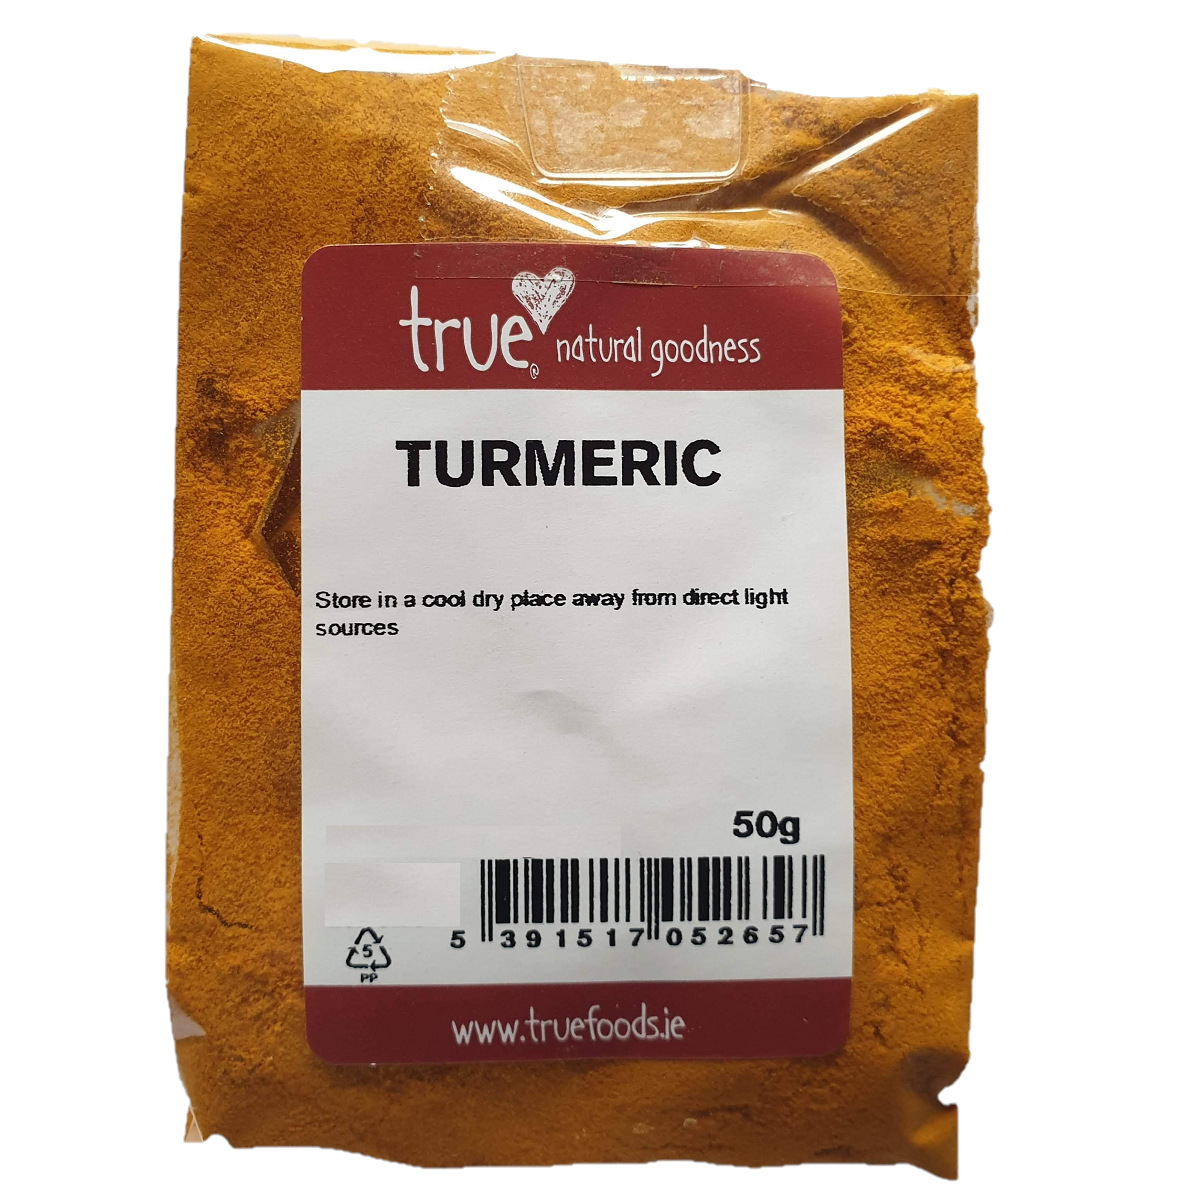 True Natural Goodness Turmeric 50g